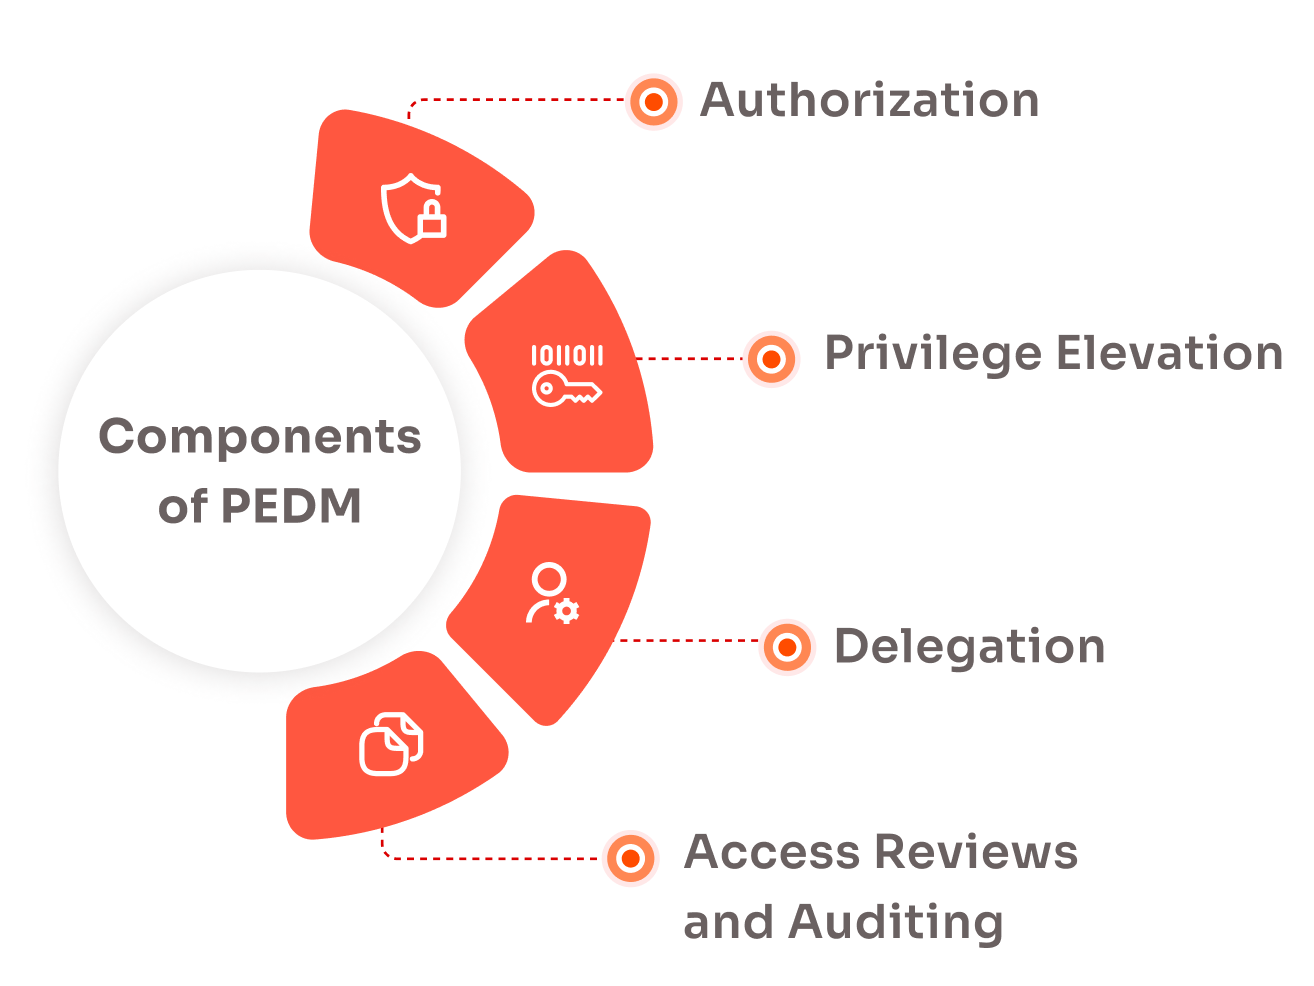 Key Components of PEDM